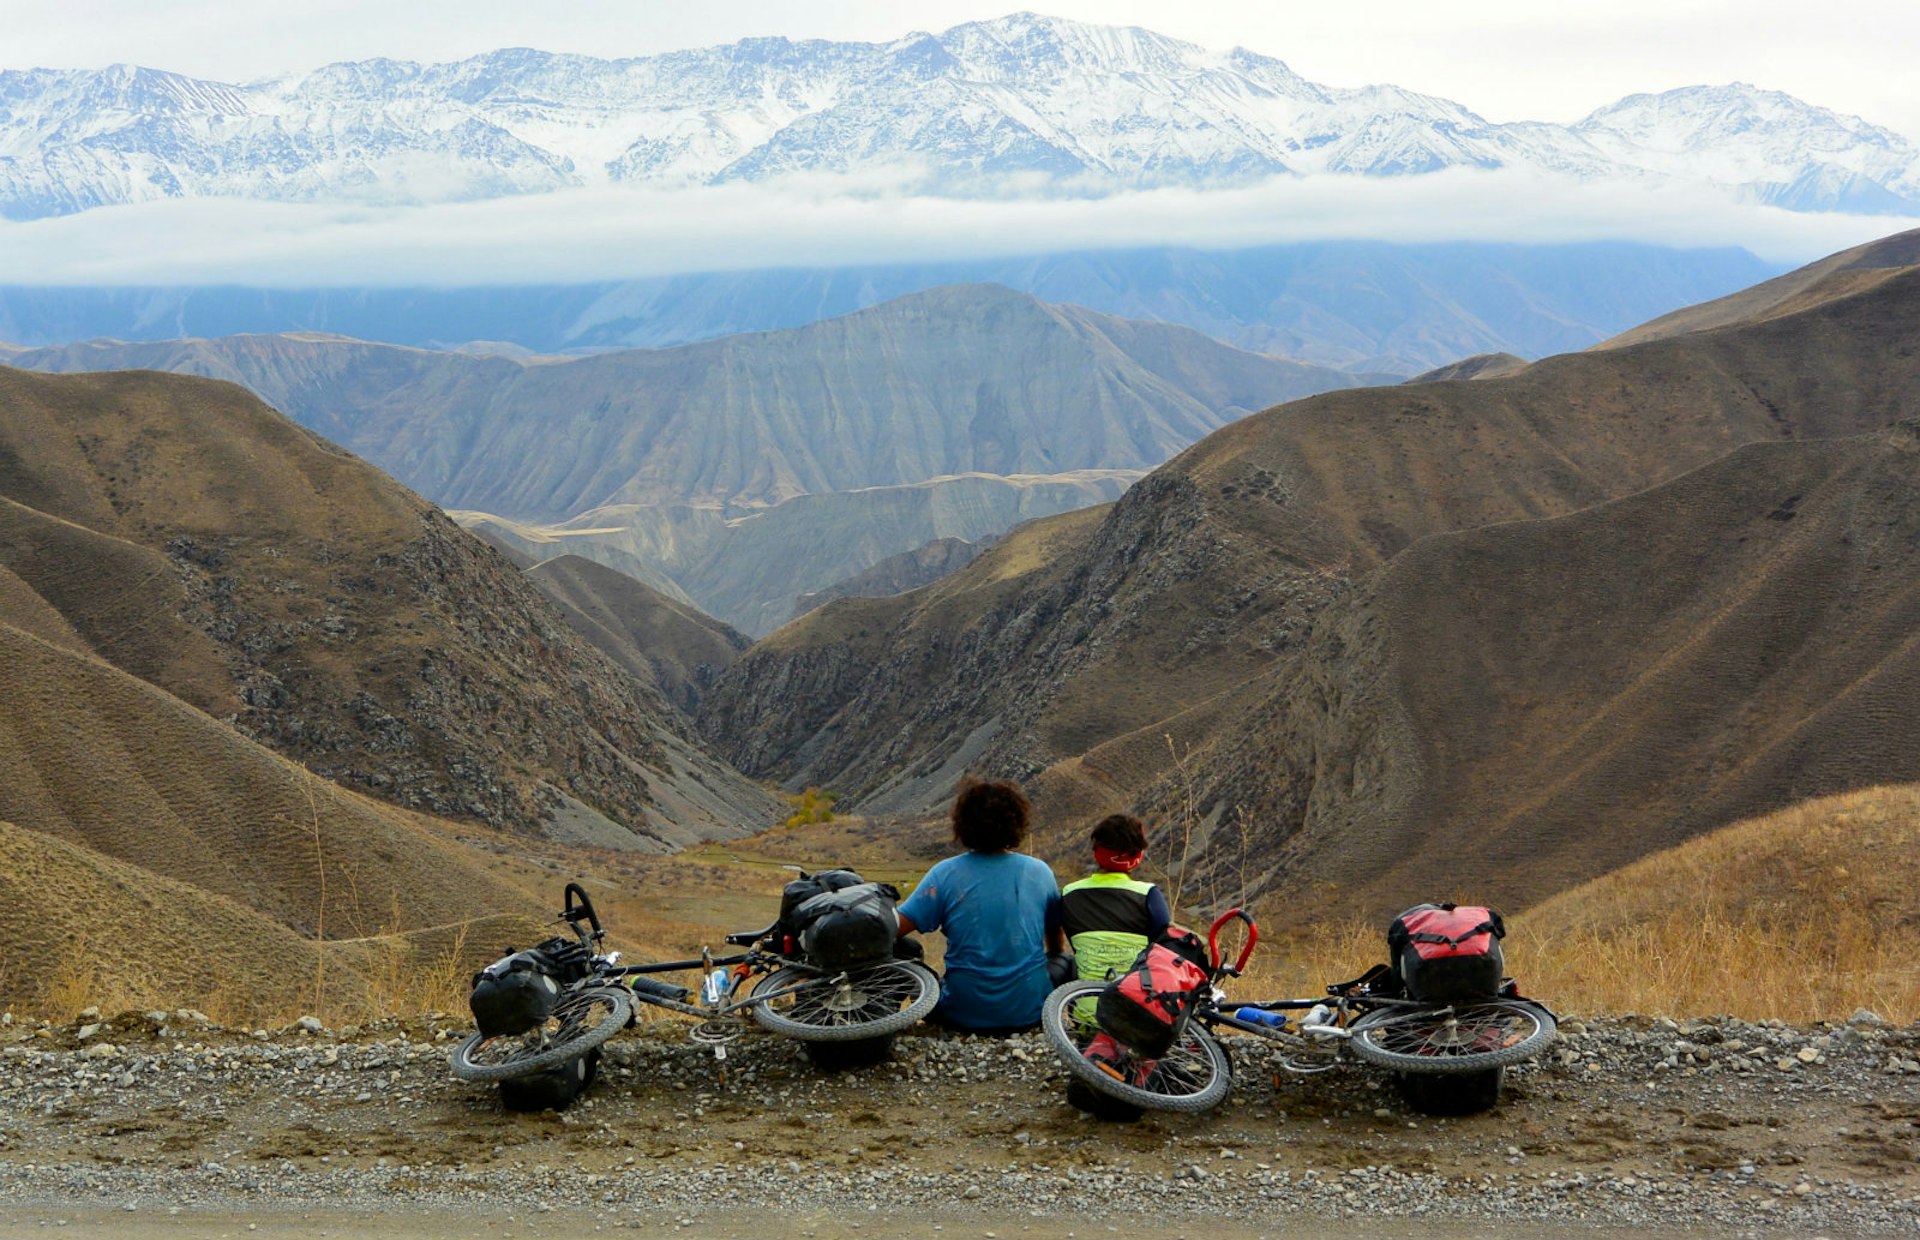 Kyrgyzstan's mountain vistas are worth the detour © Scott Daniel-Gutierrez